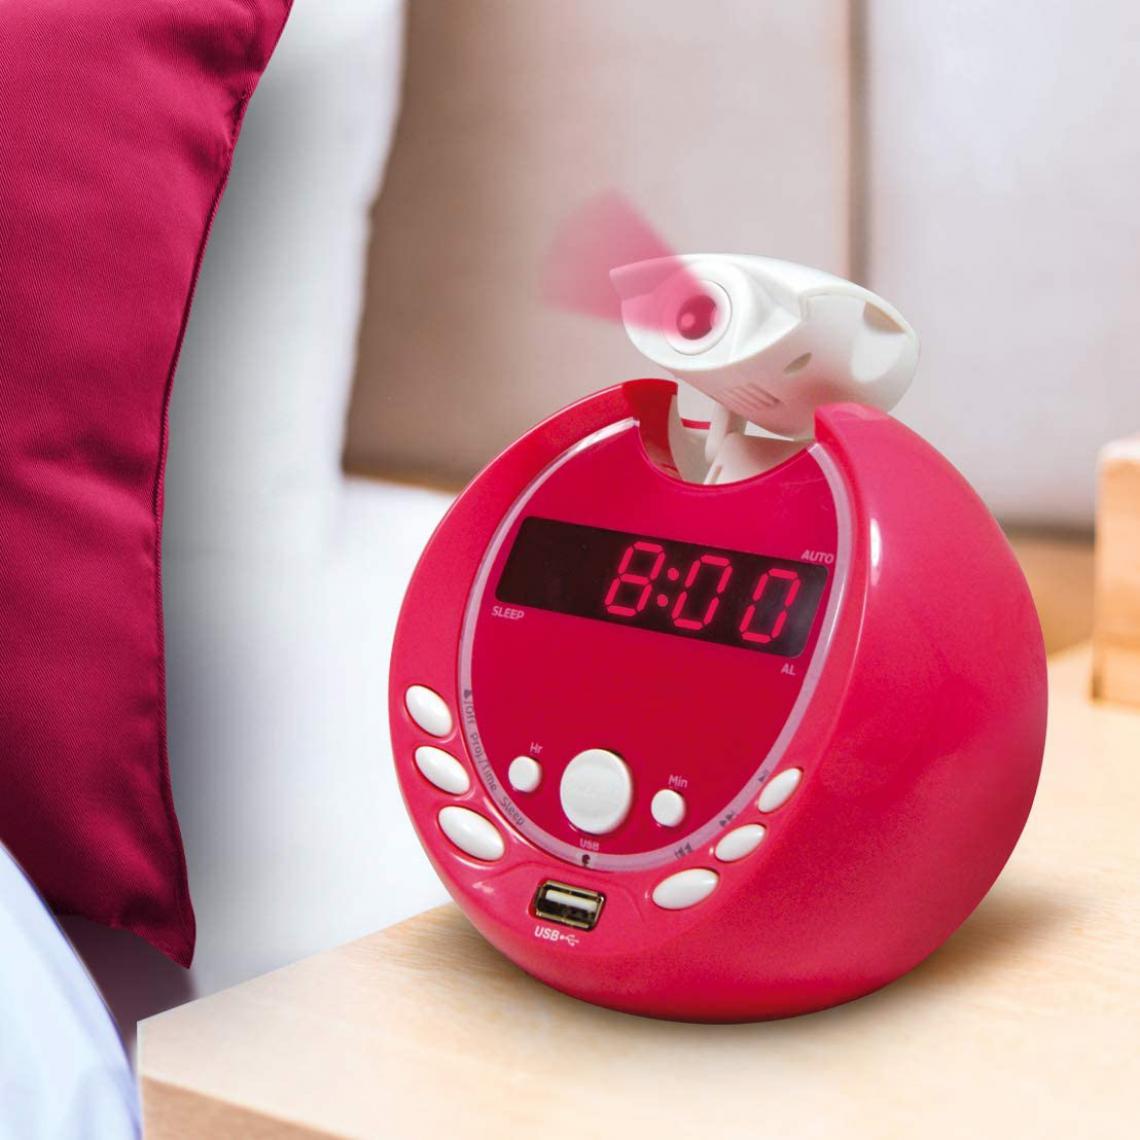 Metronic - radio Réveil Gulli MP3 USB avec projection de l'heure et alarme rose - Radio